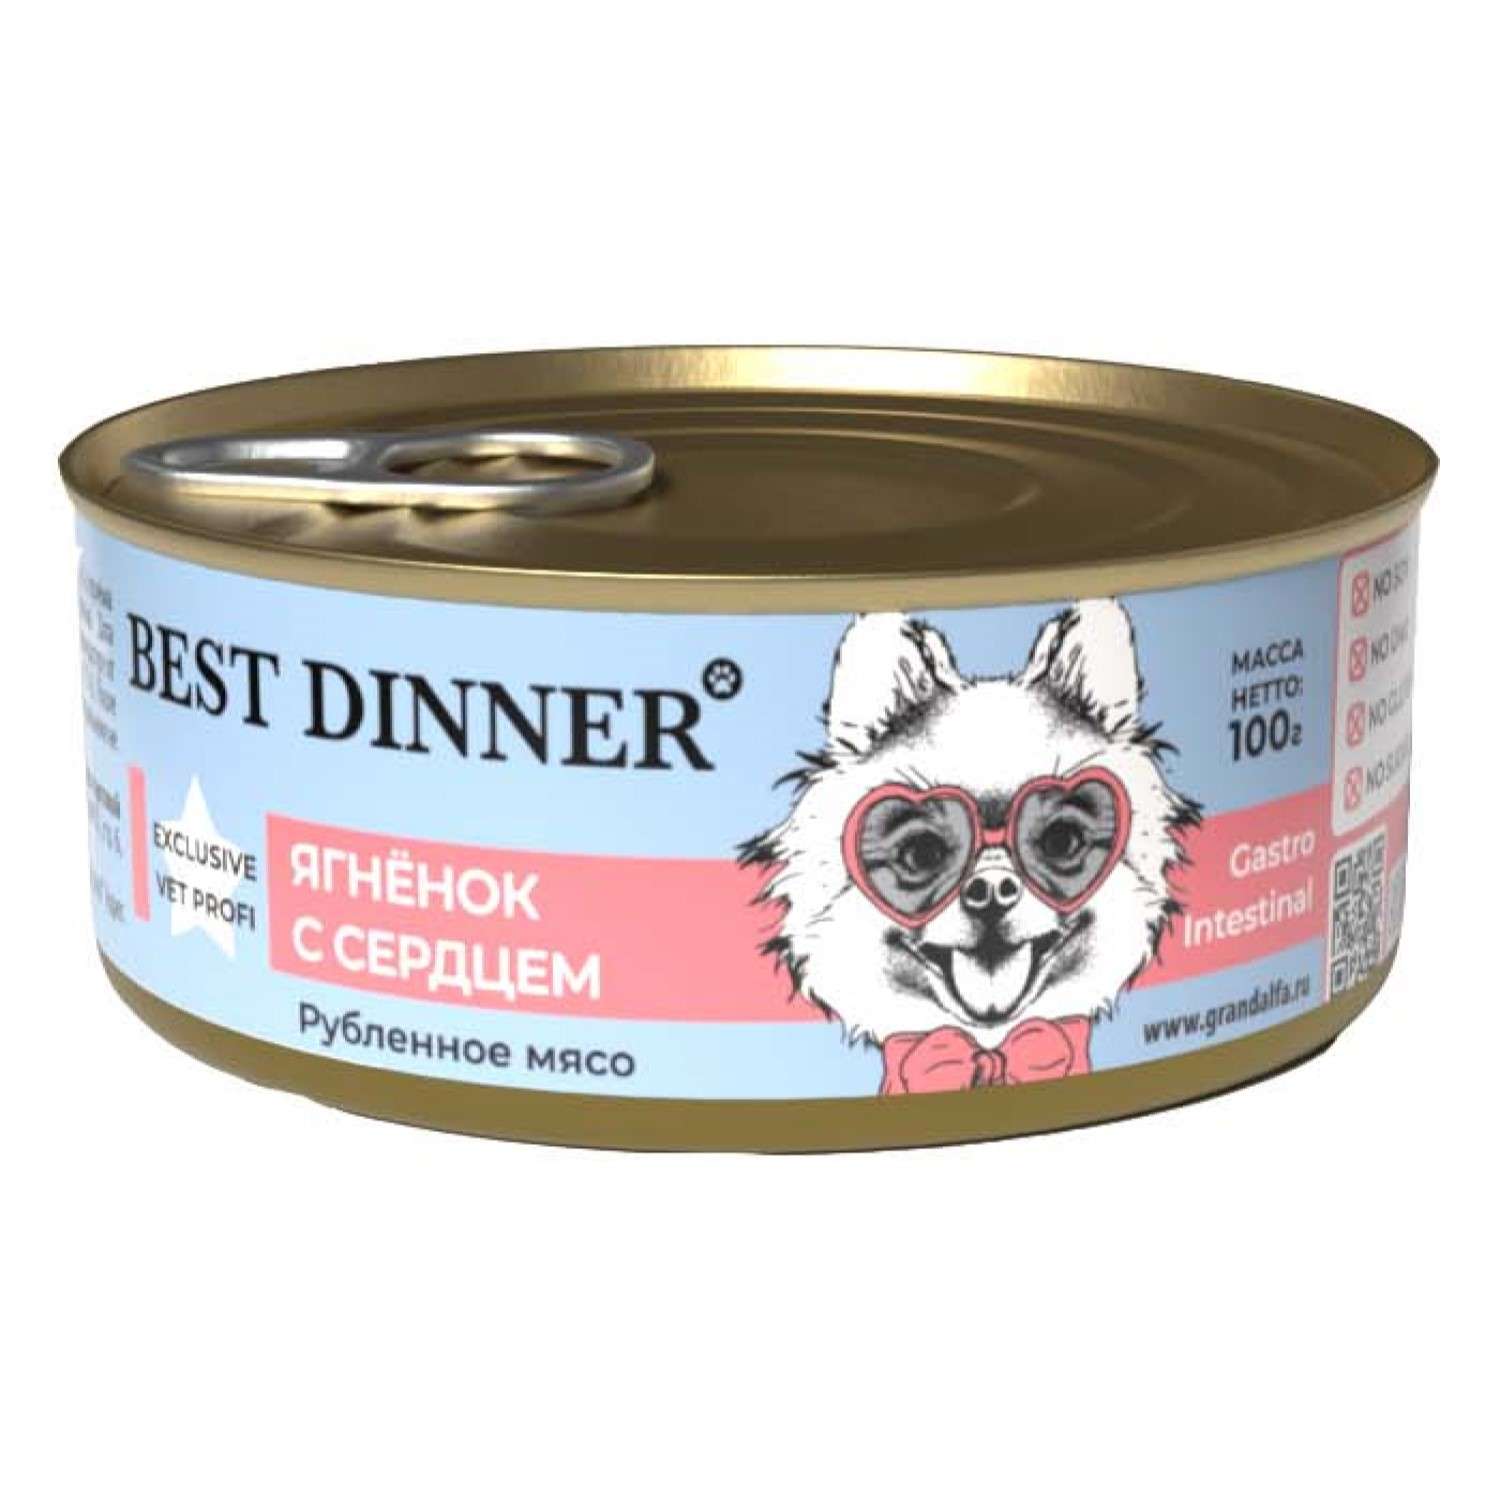 Корм для собак Best Dinner 0.1кг Exclusive Vet Profi Gastro Intestinal ягненок с сердцем - фото 1